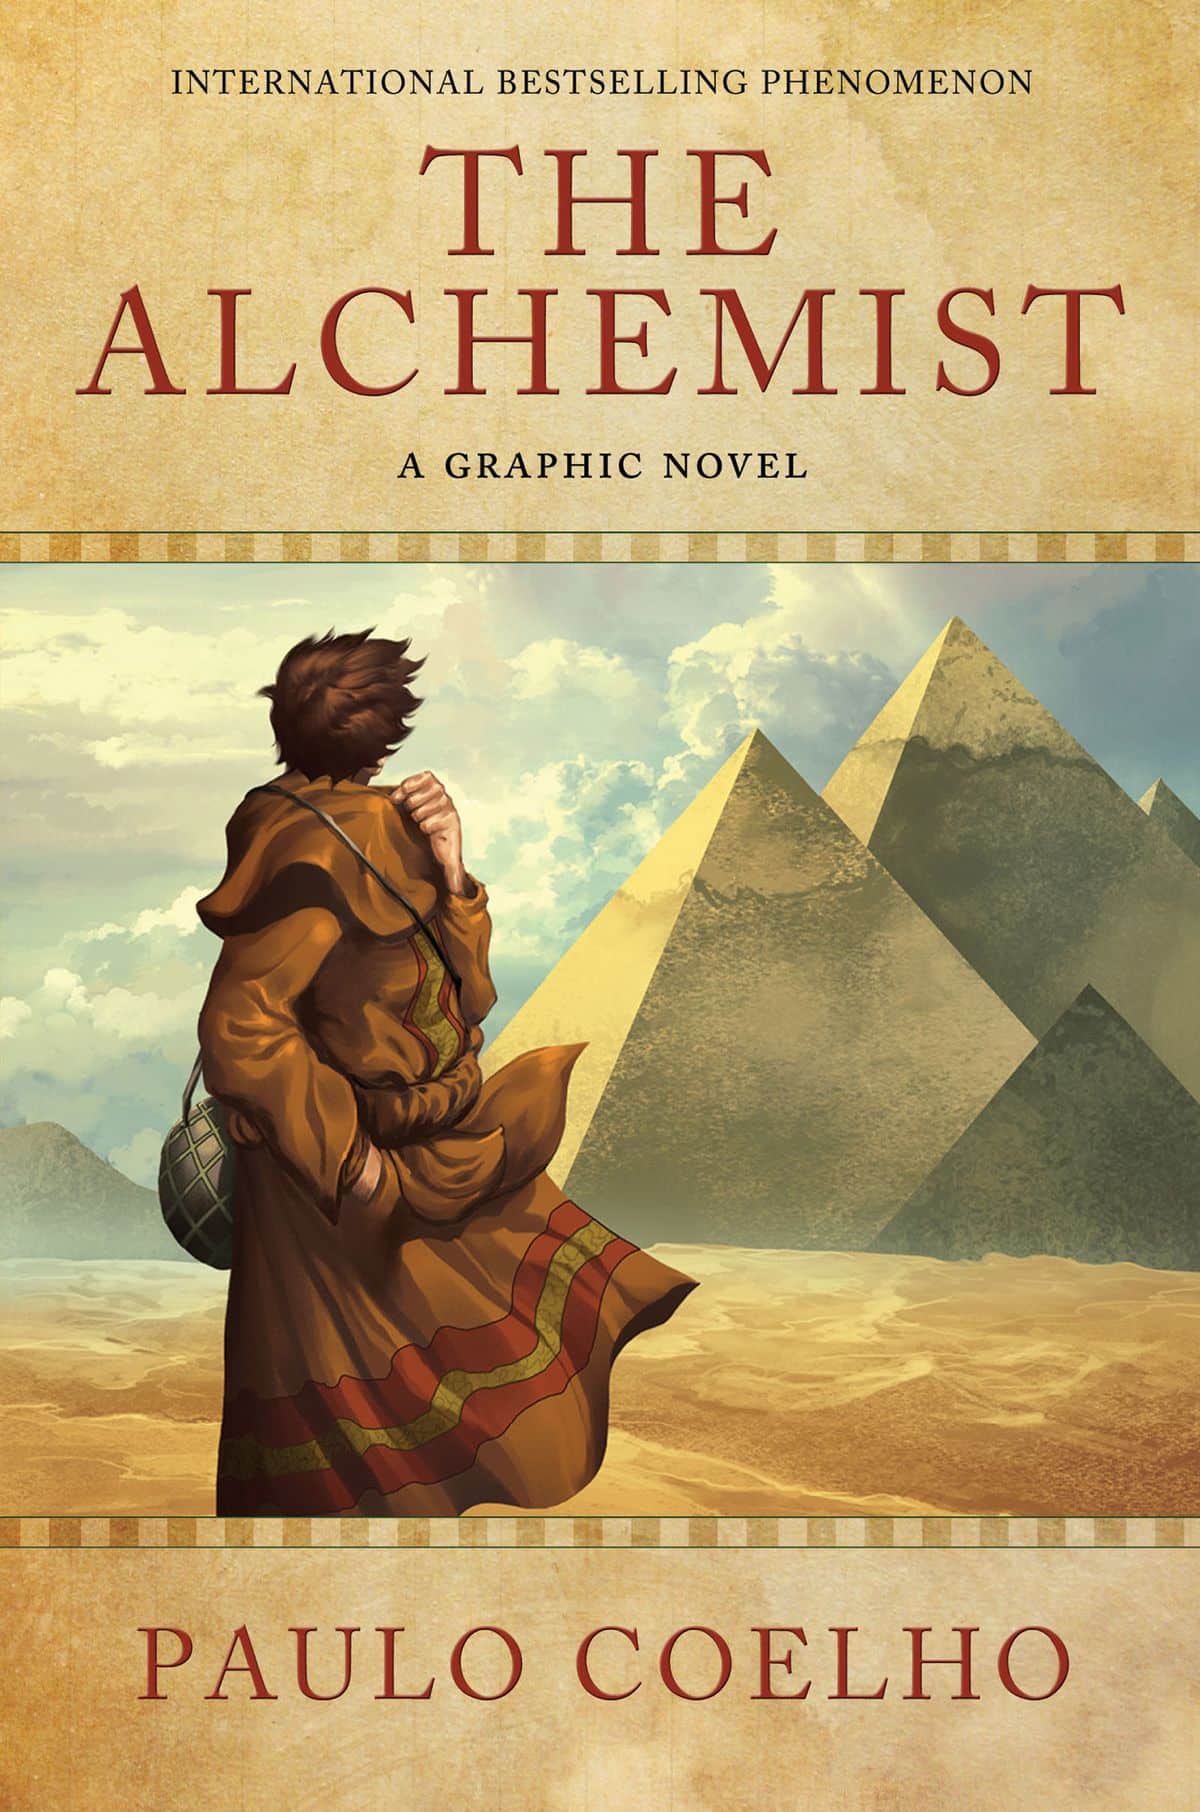 main idea of the alchemist